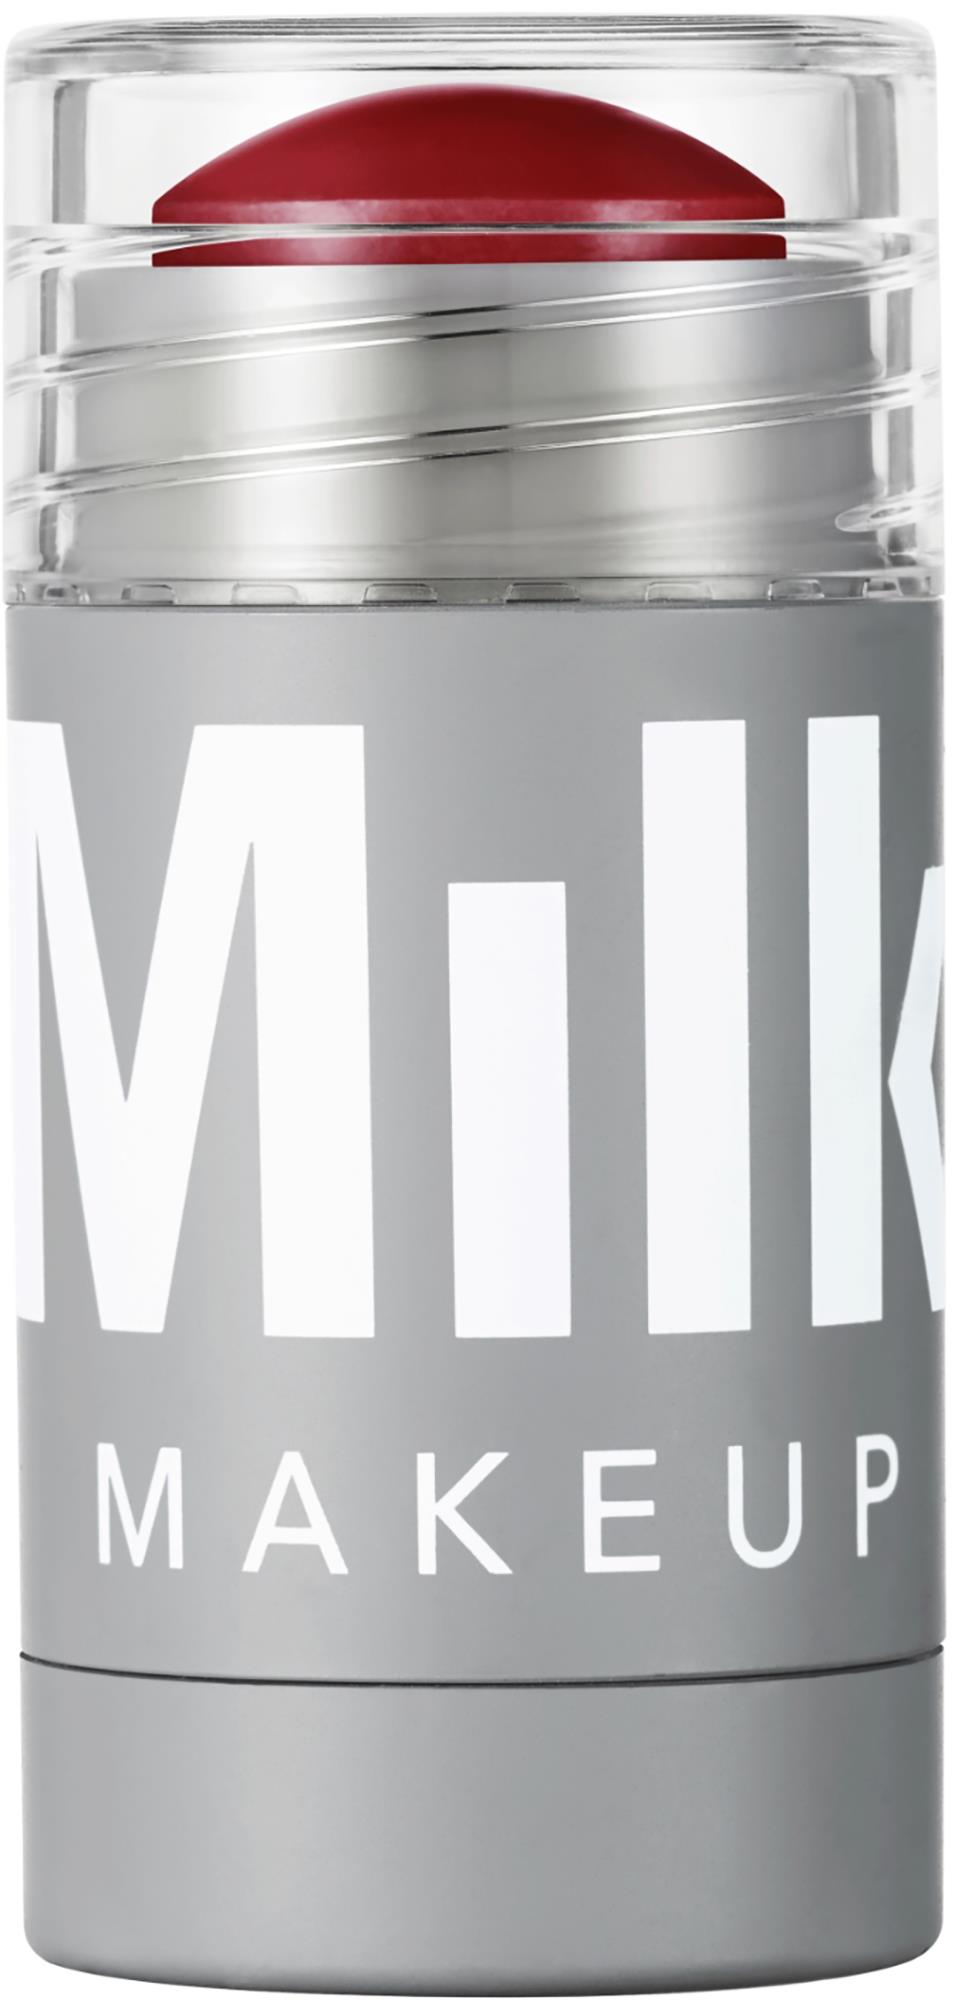 Milk Makeup Lip + Cheek Muse